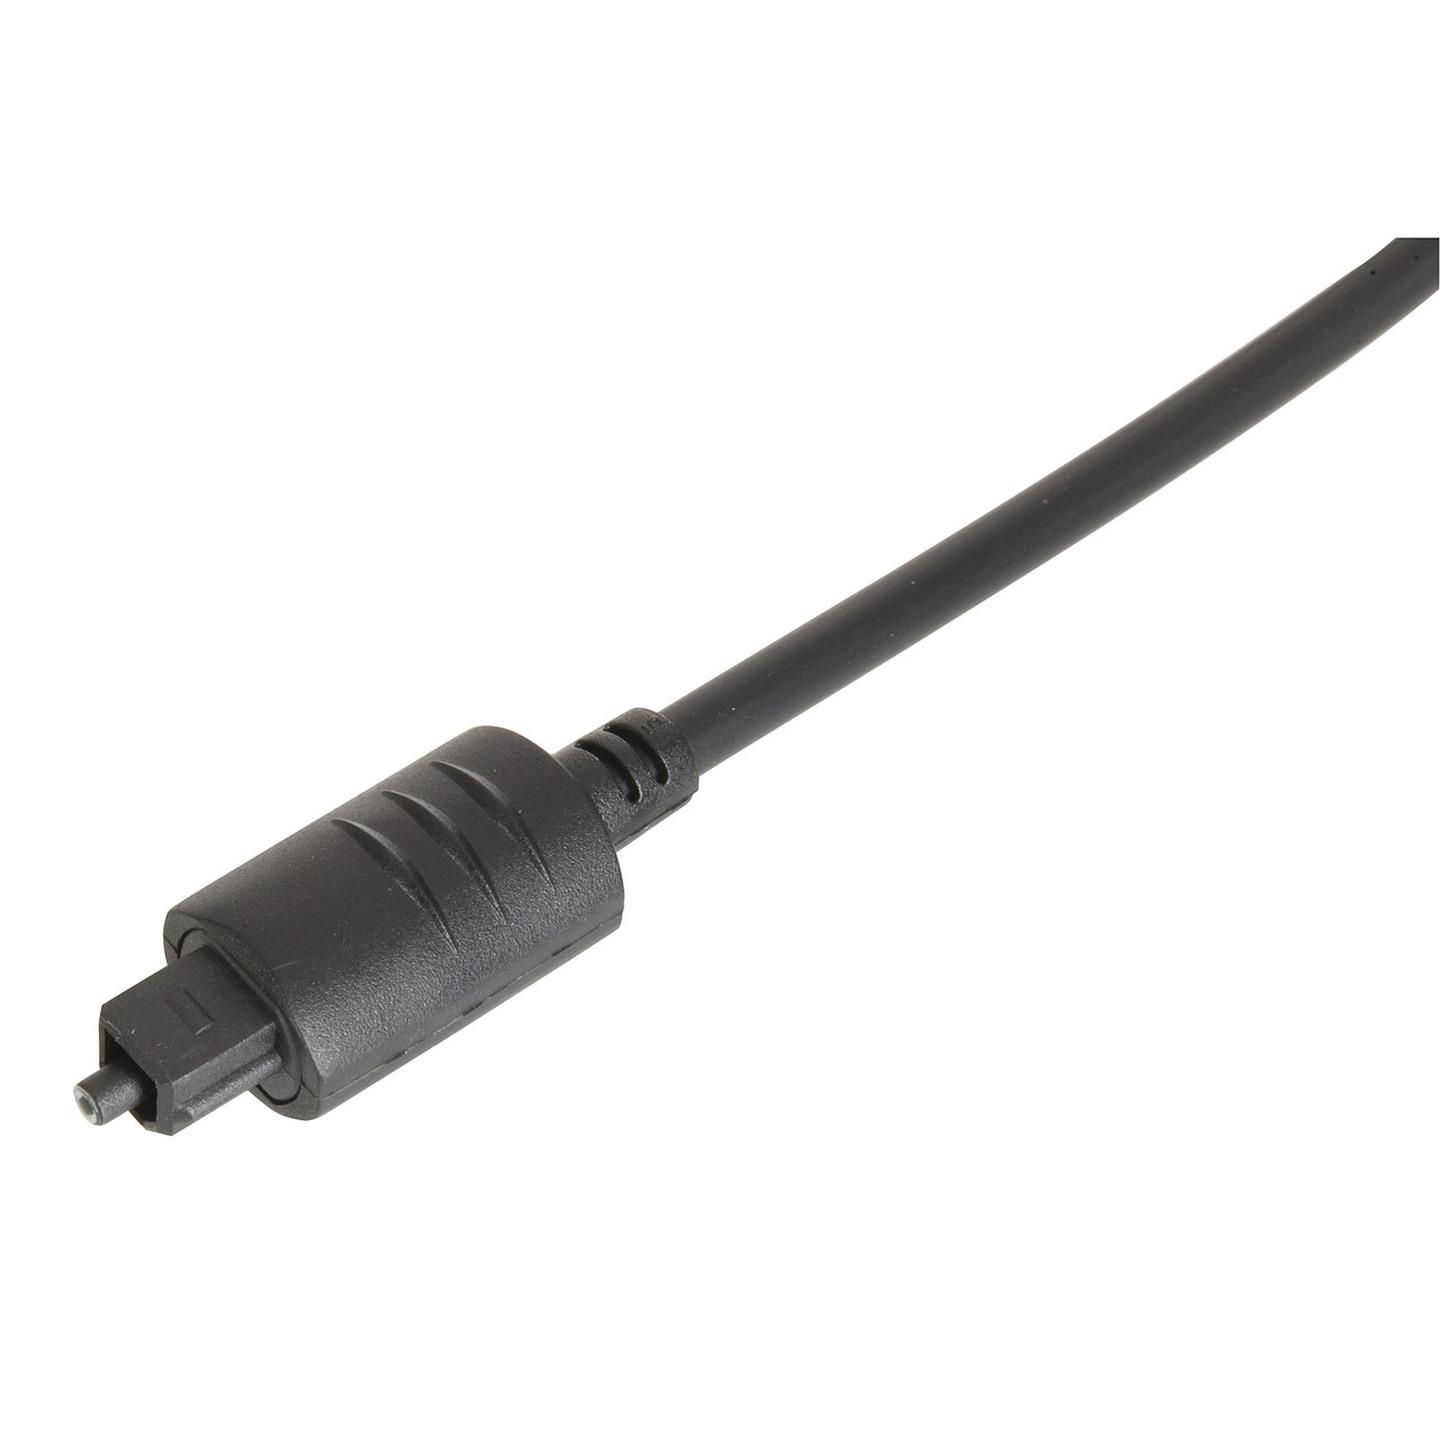 0.5m TOSLINK Fibre Optic Audio Cable